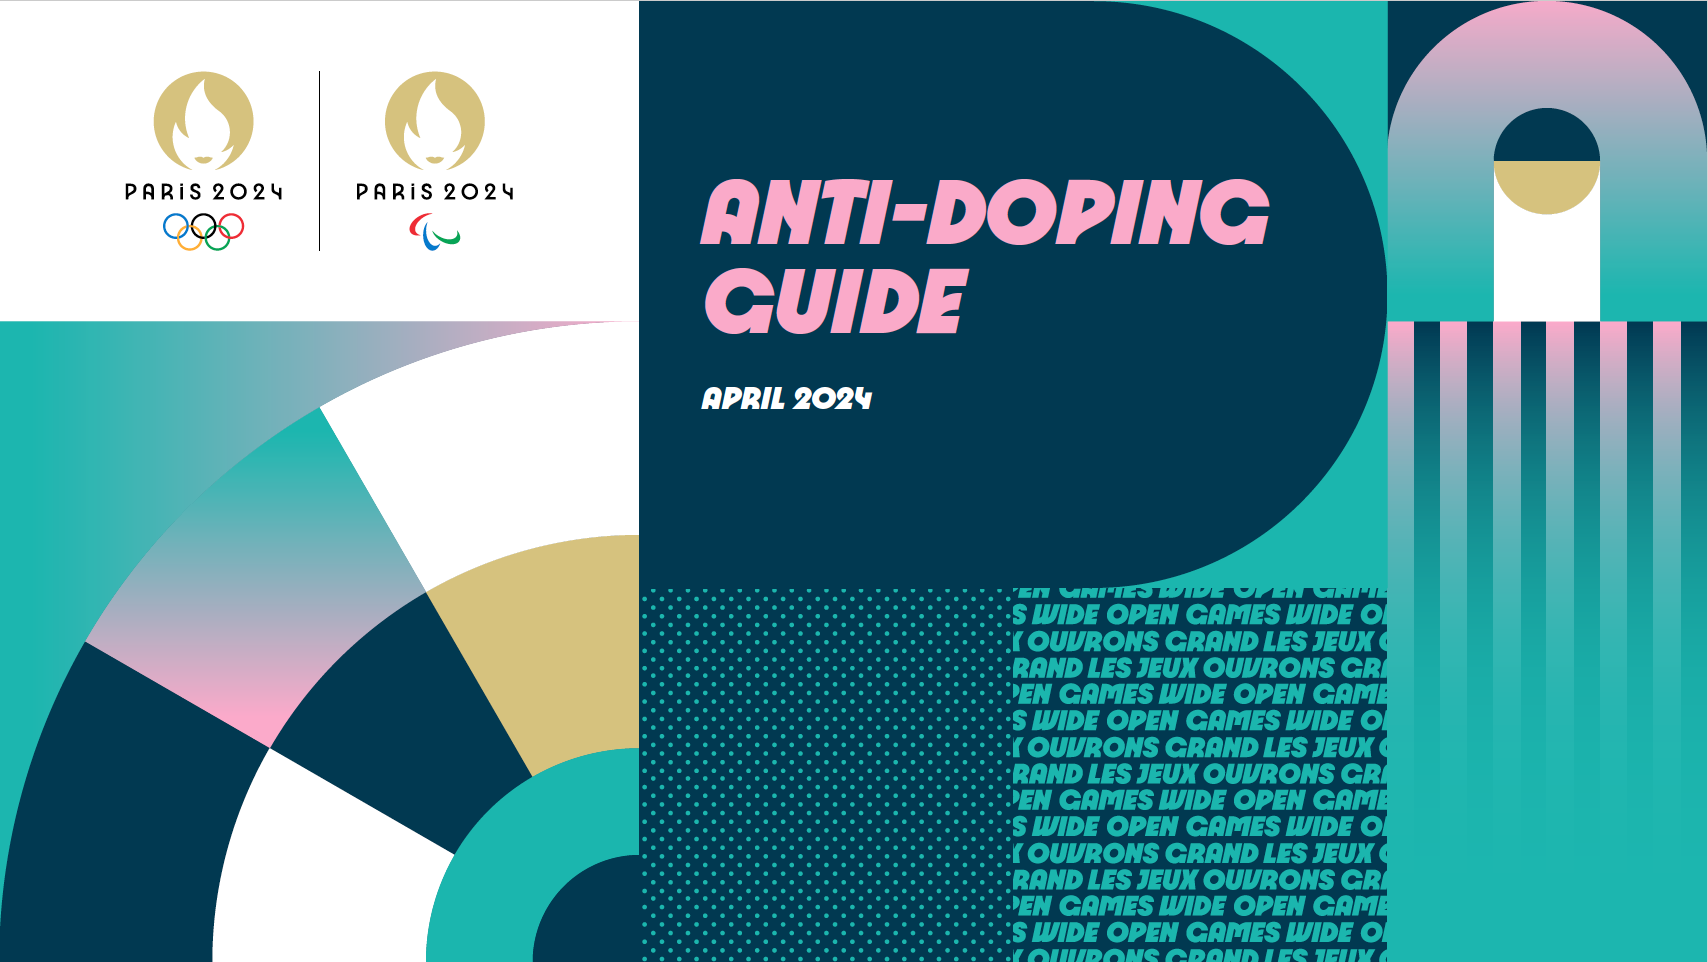 Paris 2024 Anti-Doping Guide